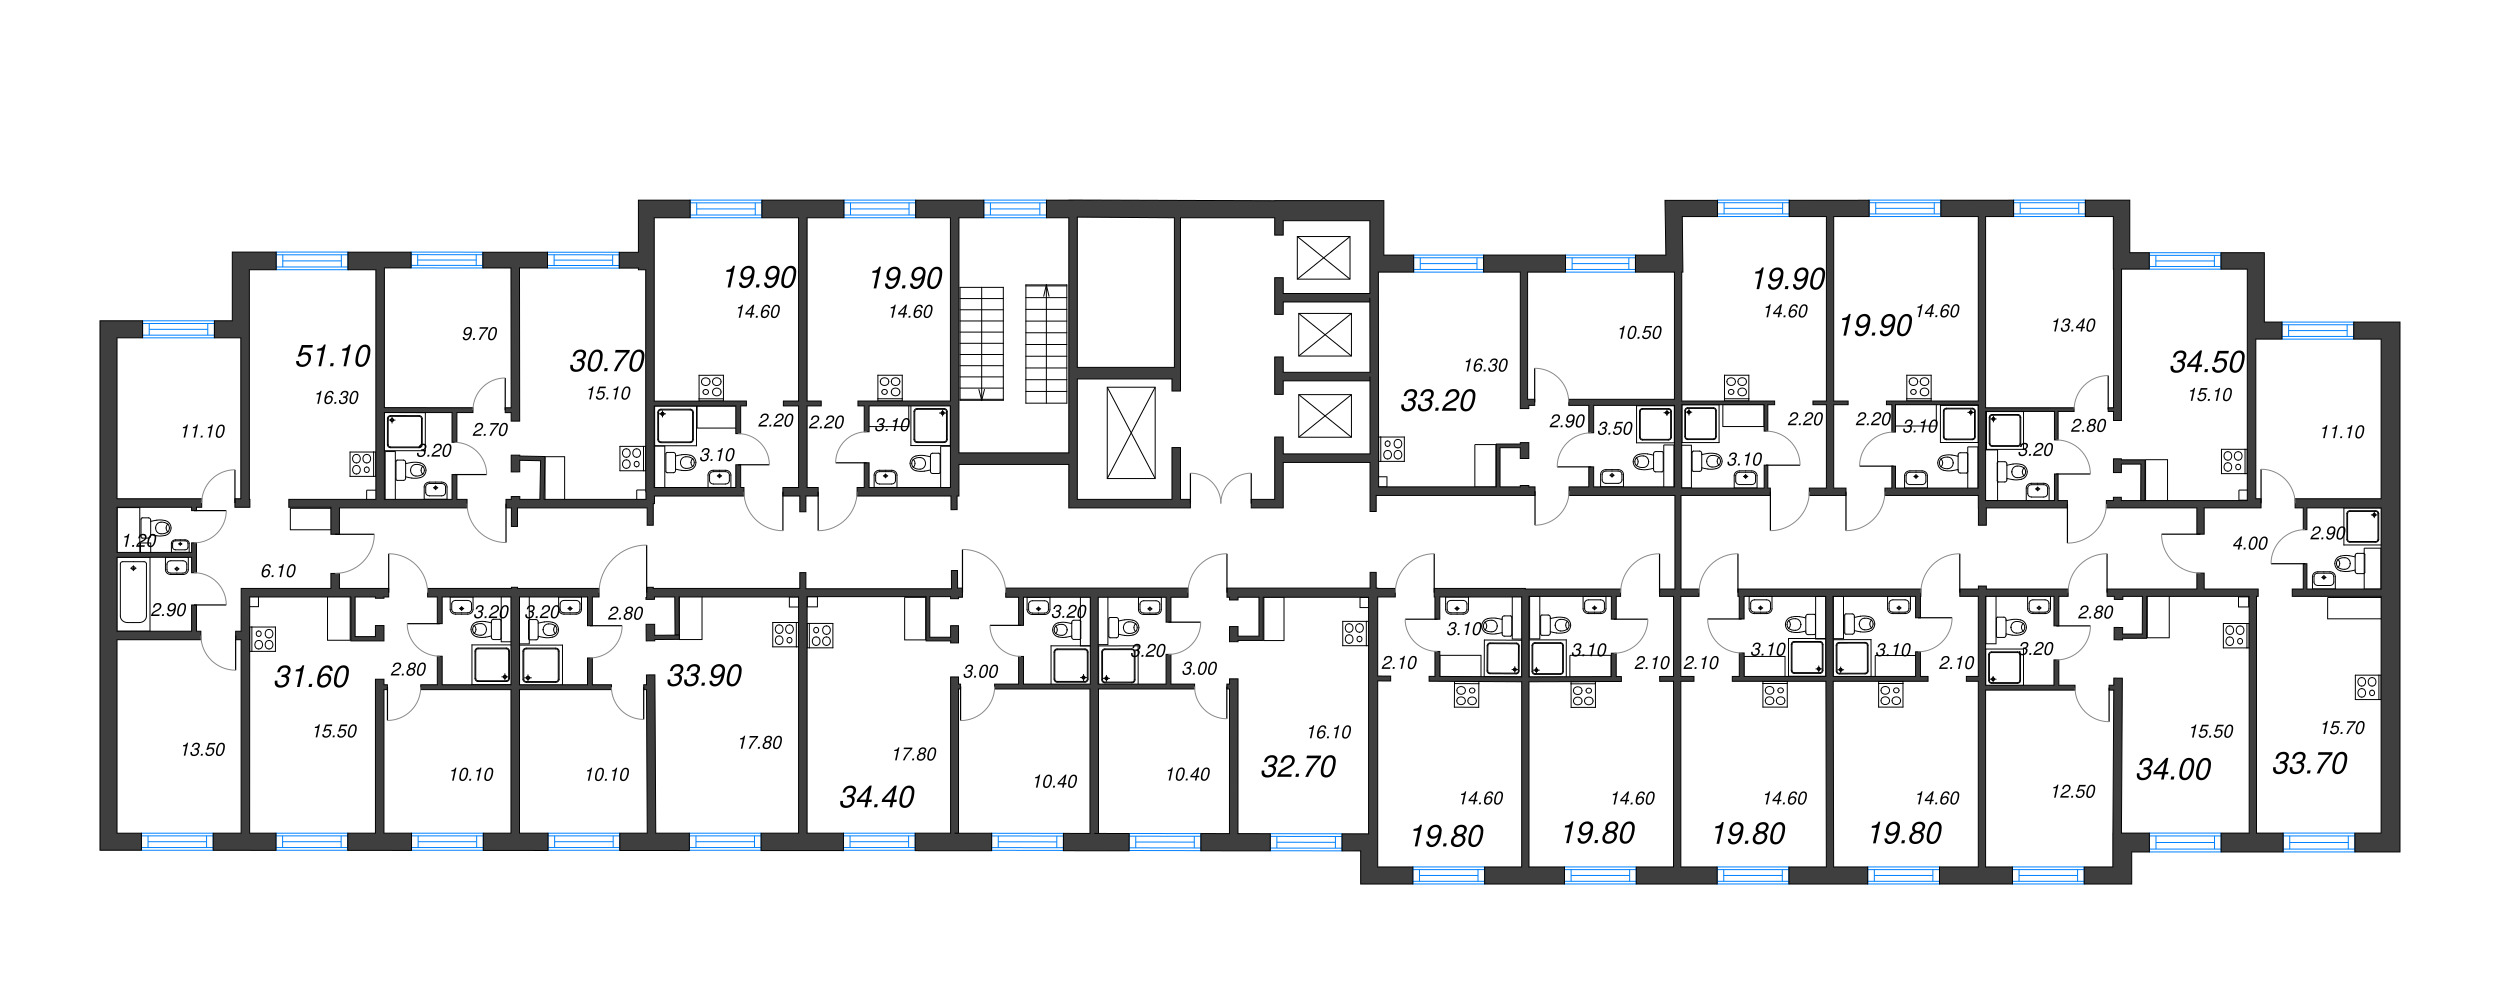 3-комнатная (Евро) квартира, 51.1 м² - планировка этажа